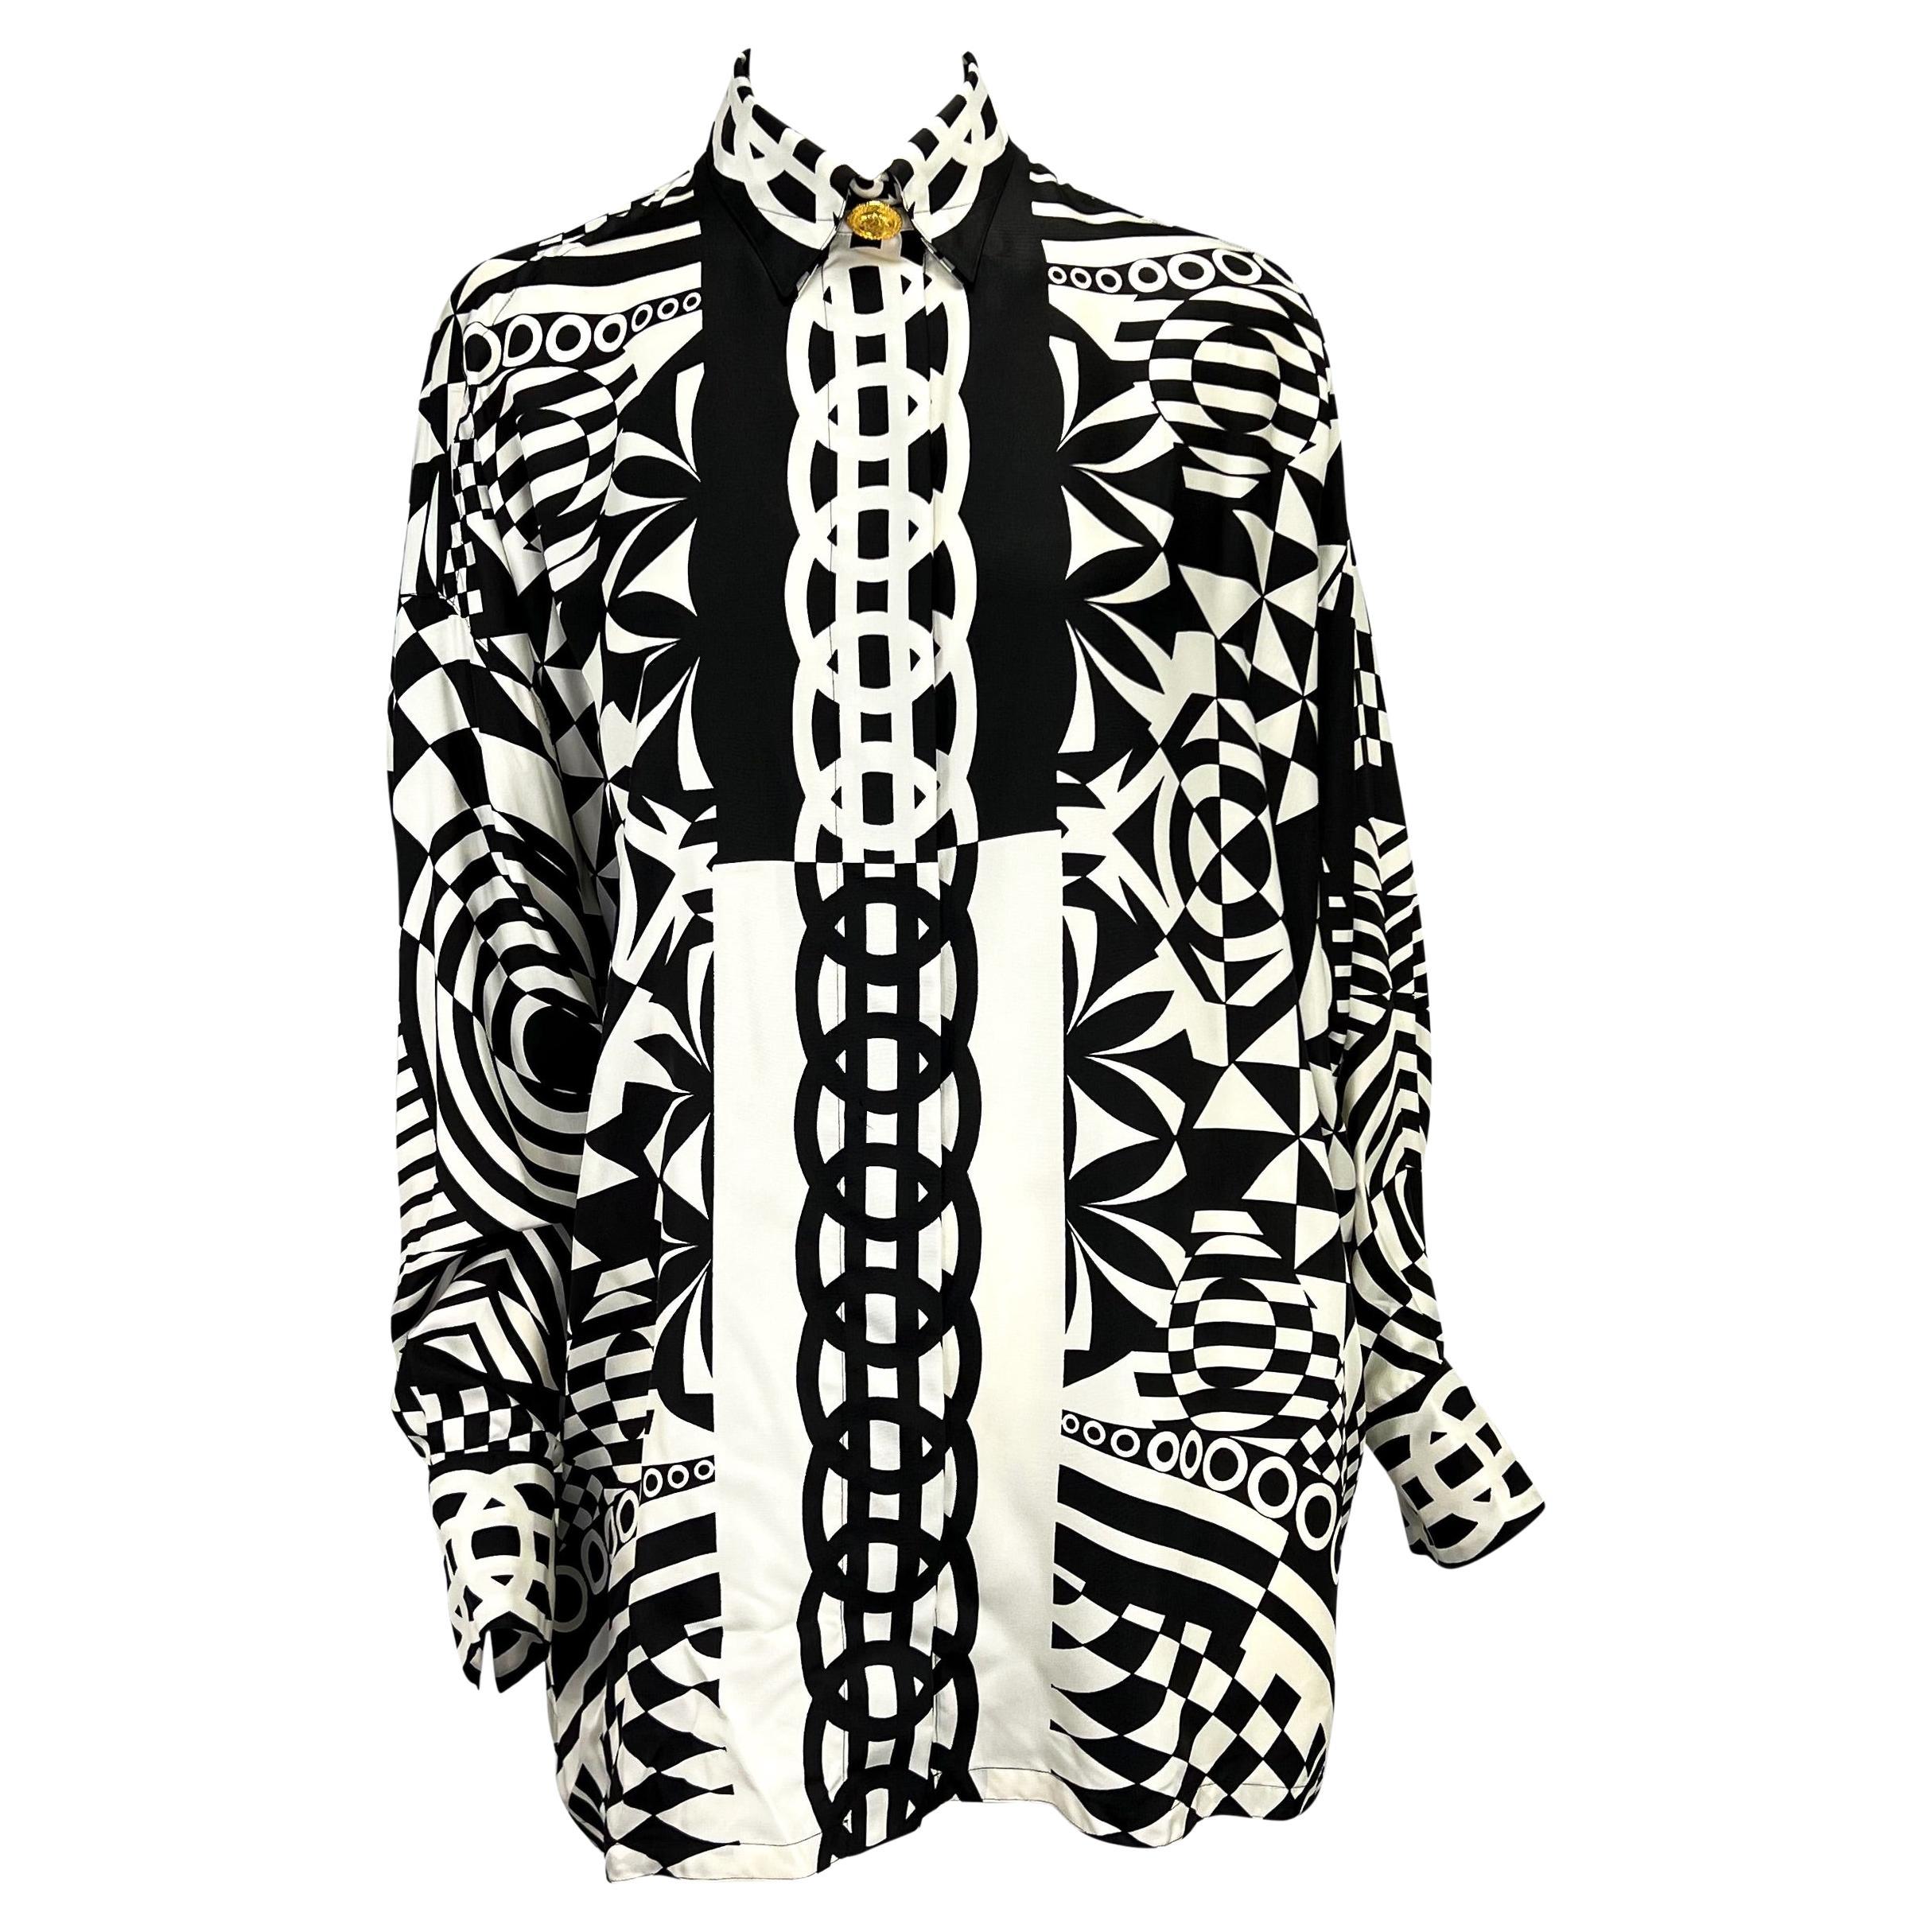 S/S 1992 Gianni Versace Couture Silk Black & White Geometric Print Button Down For Sale